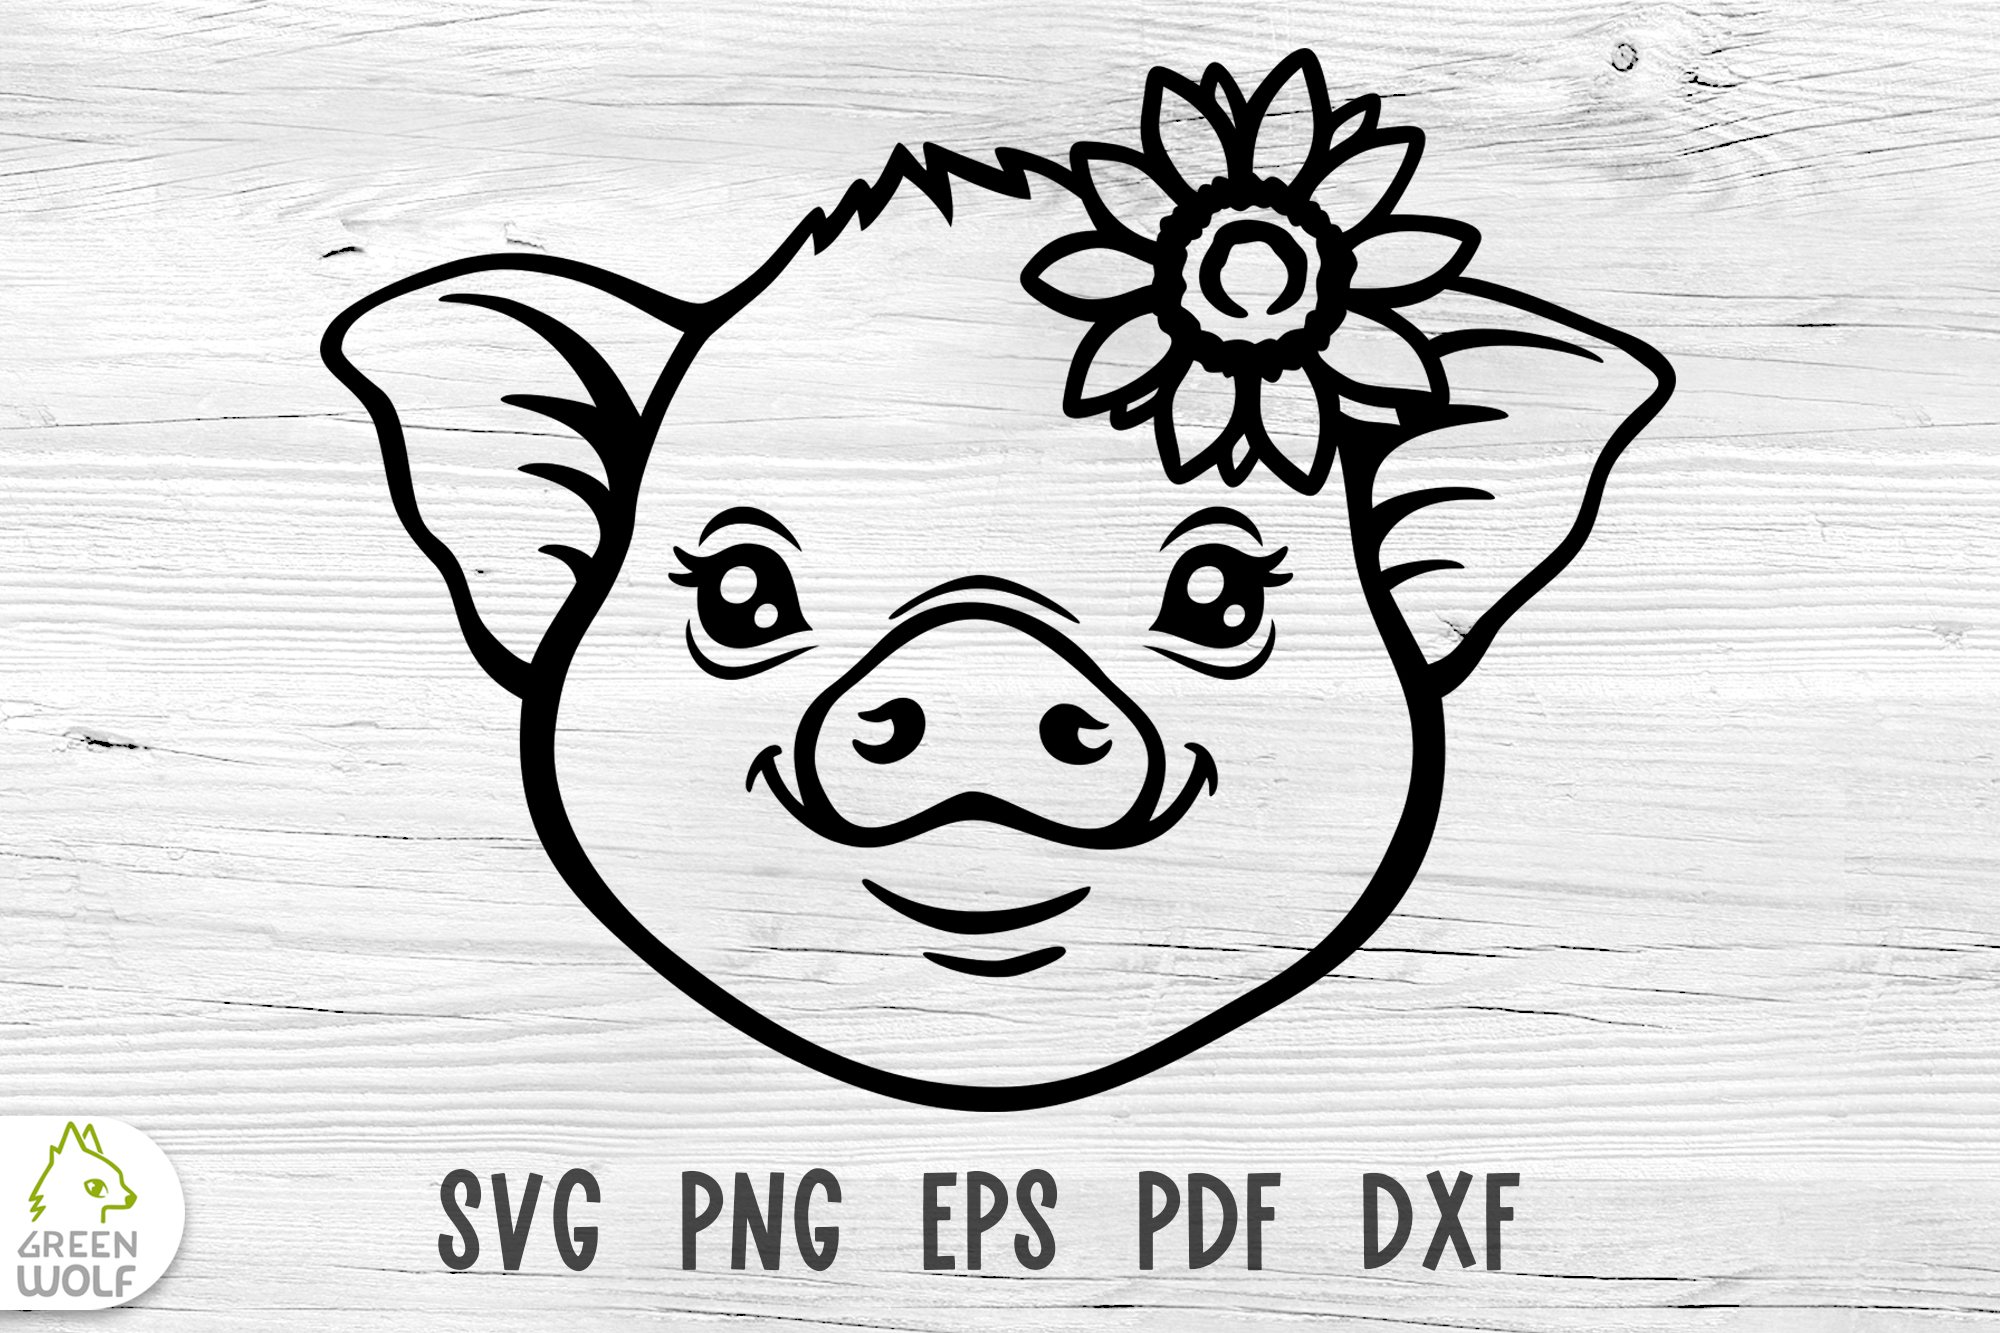 Pig Face SVG Pig SVG Cut Files Baby Farm Animals SVG Cricut.